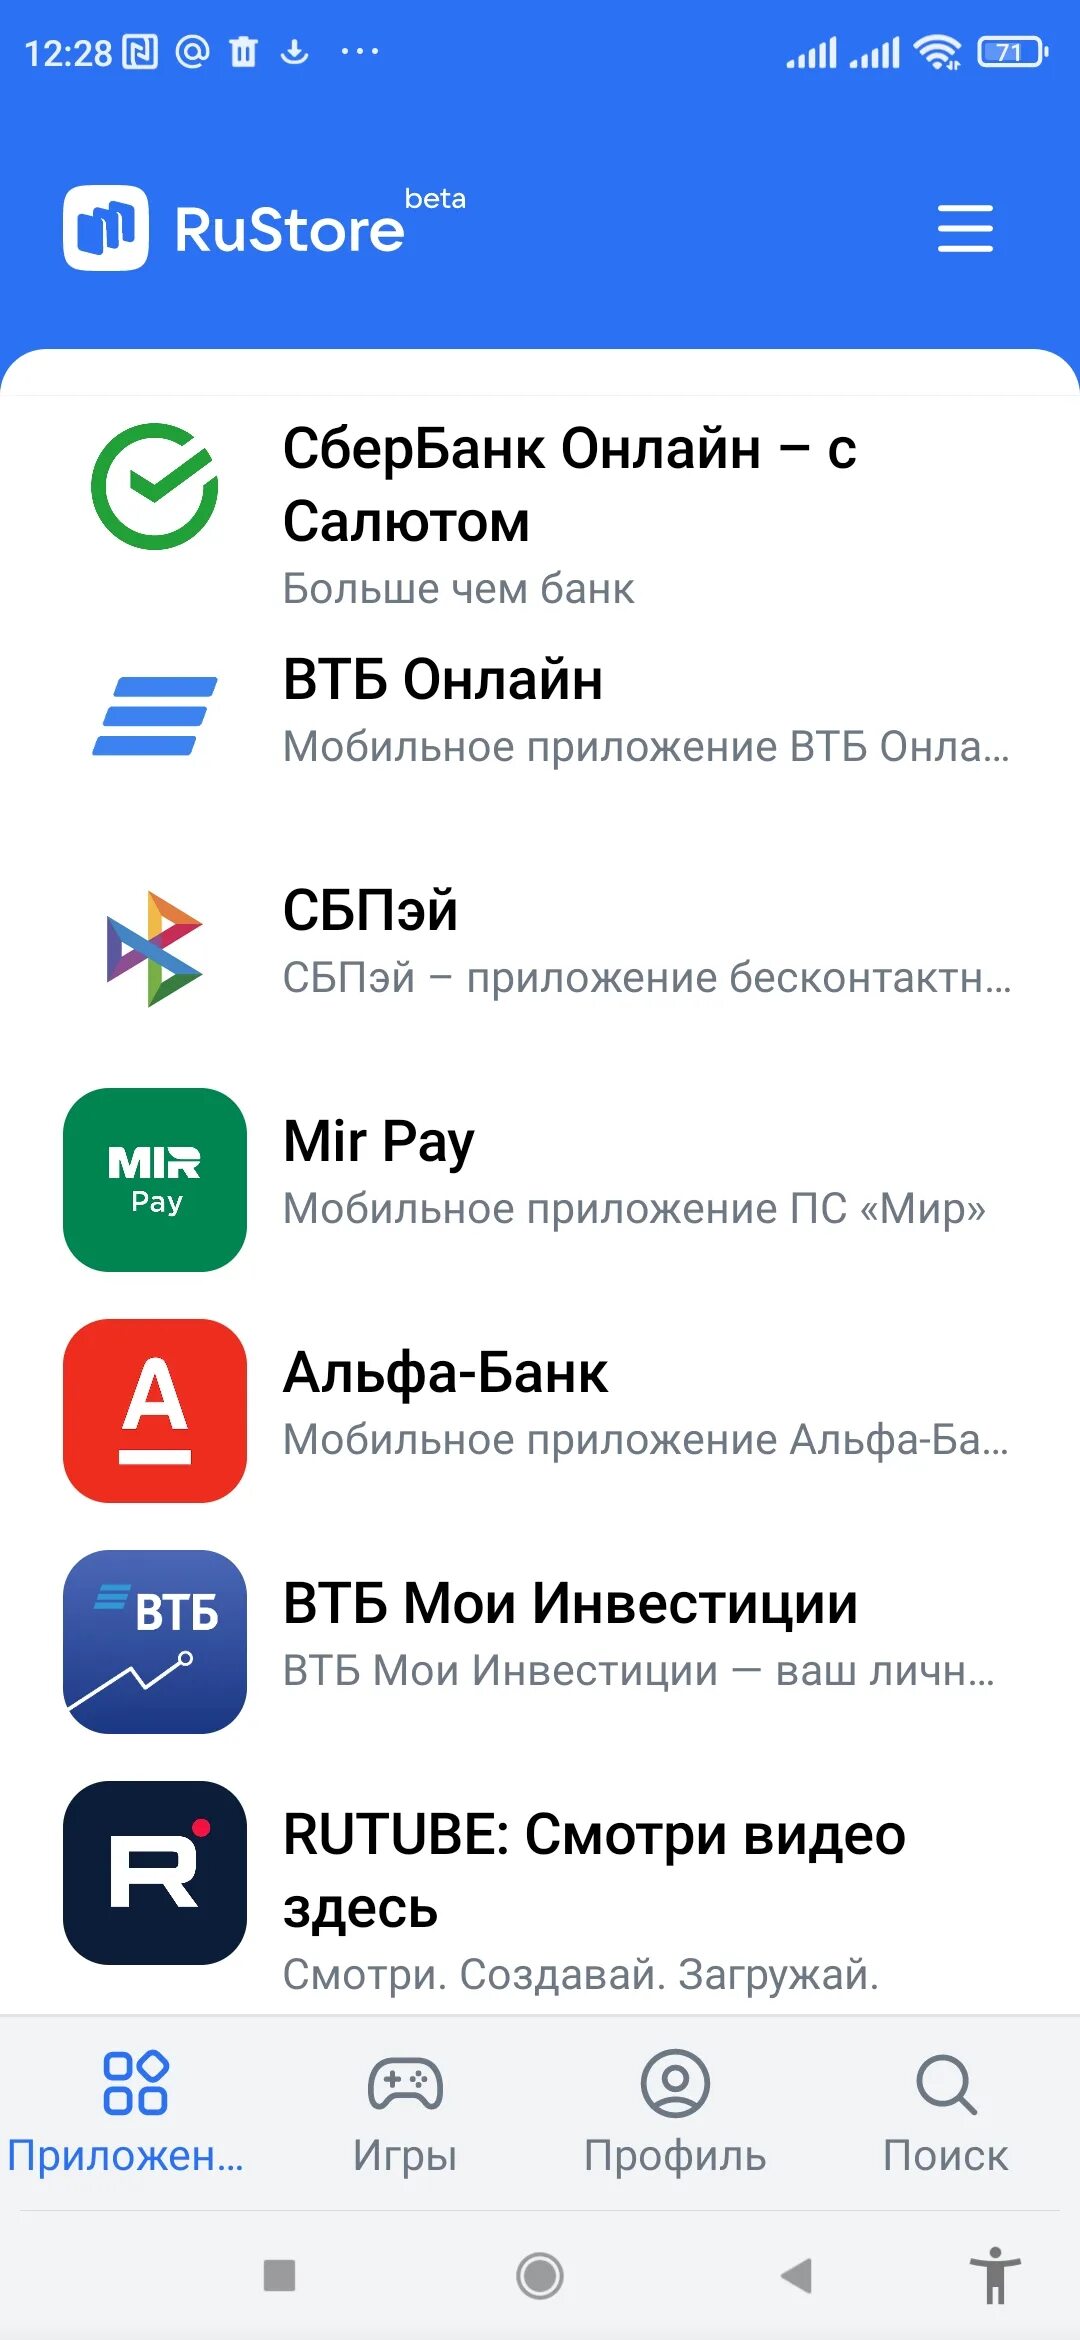 Https apps rustore ru app ru digarch. Рустор магазин приложений. Приложение Рустор для приложений. Российский магазин приложений. Российский магазин приложений для андроид.